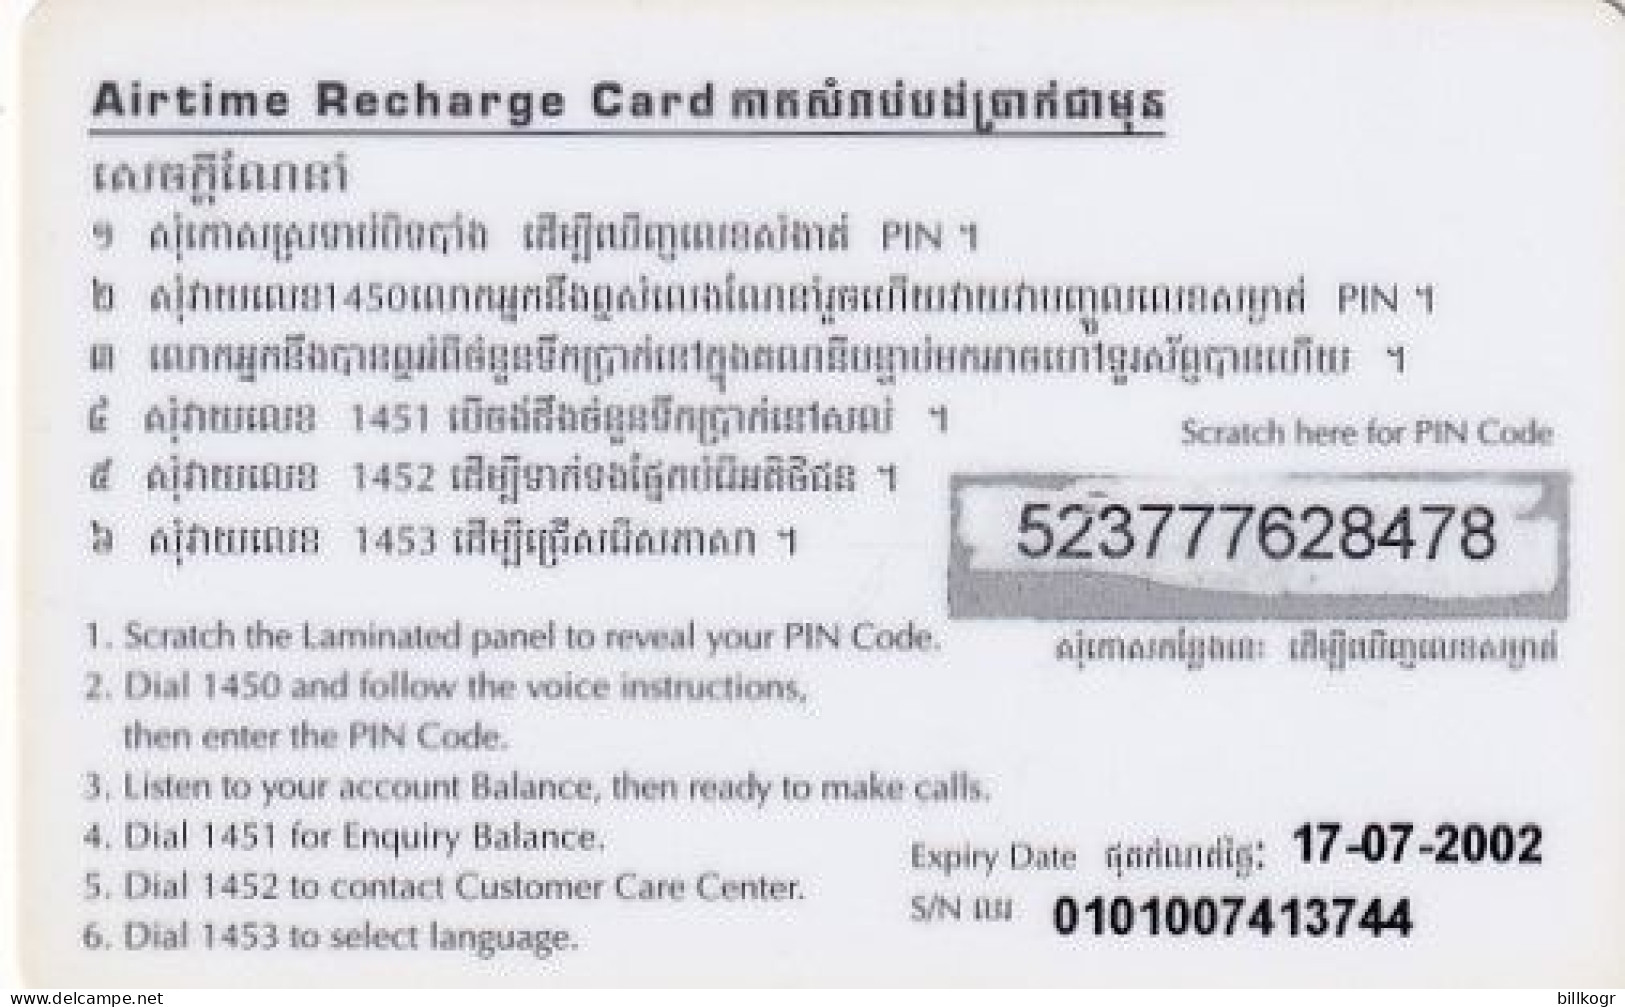 CAMBODIA - Bird, SAMART Prepaid Card $10, Exp.date 17/07/02, Used - Cambodia